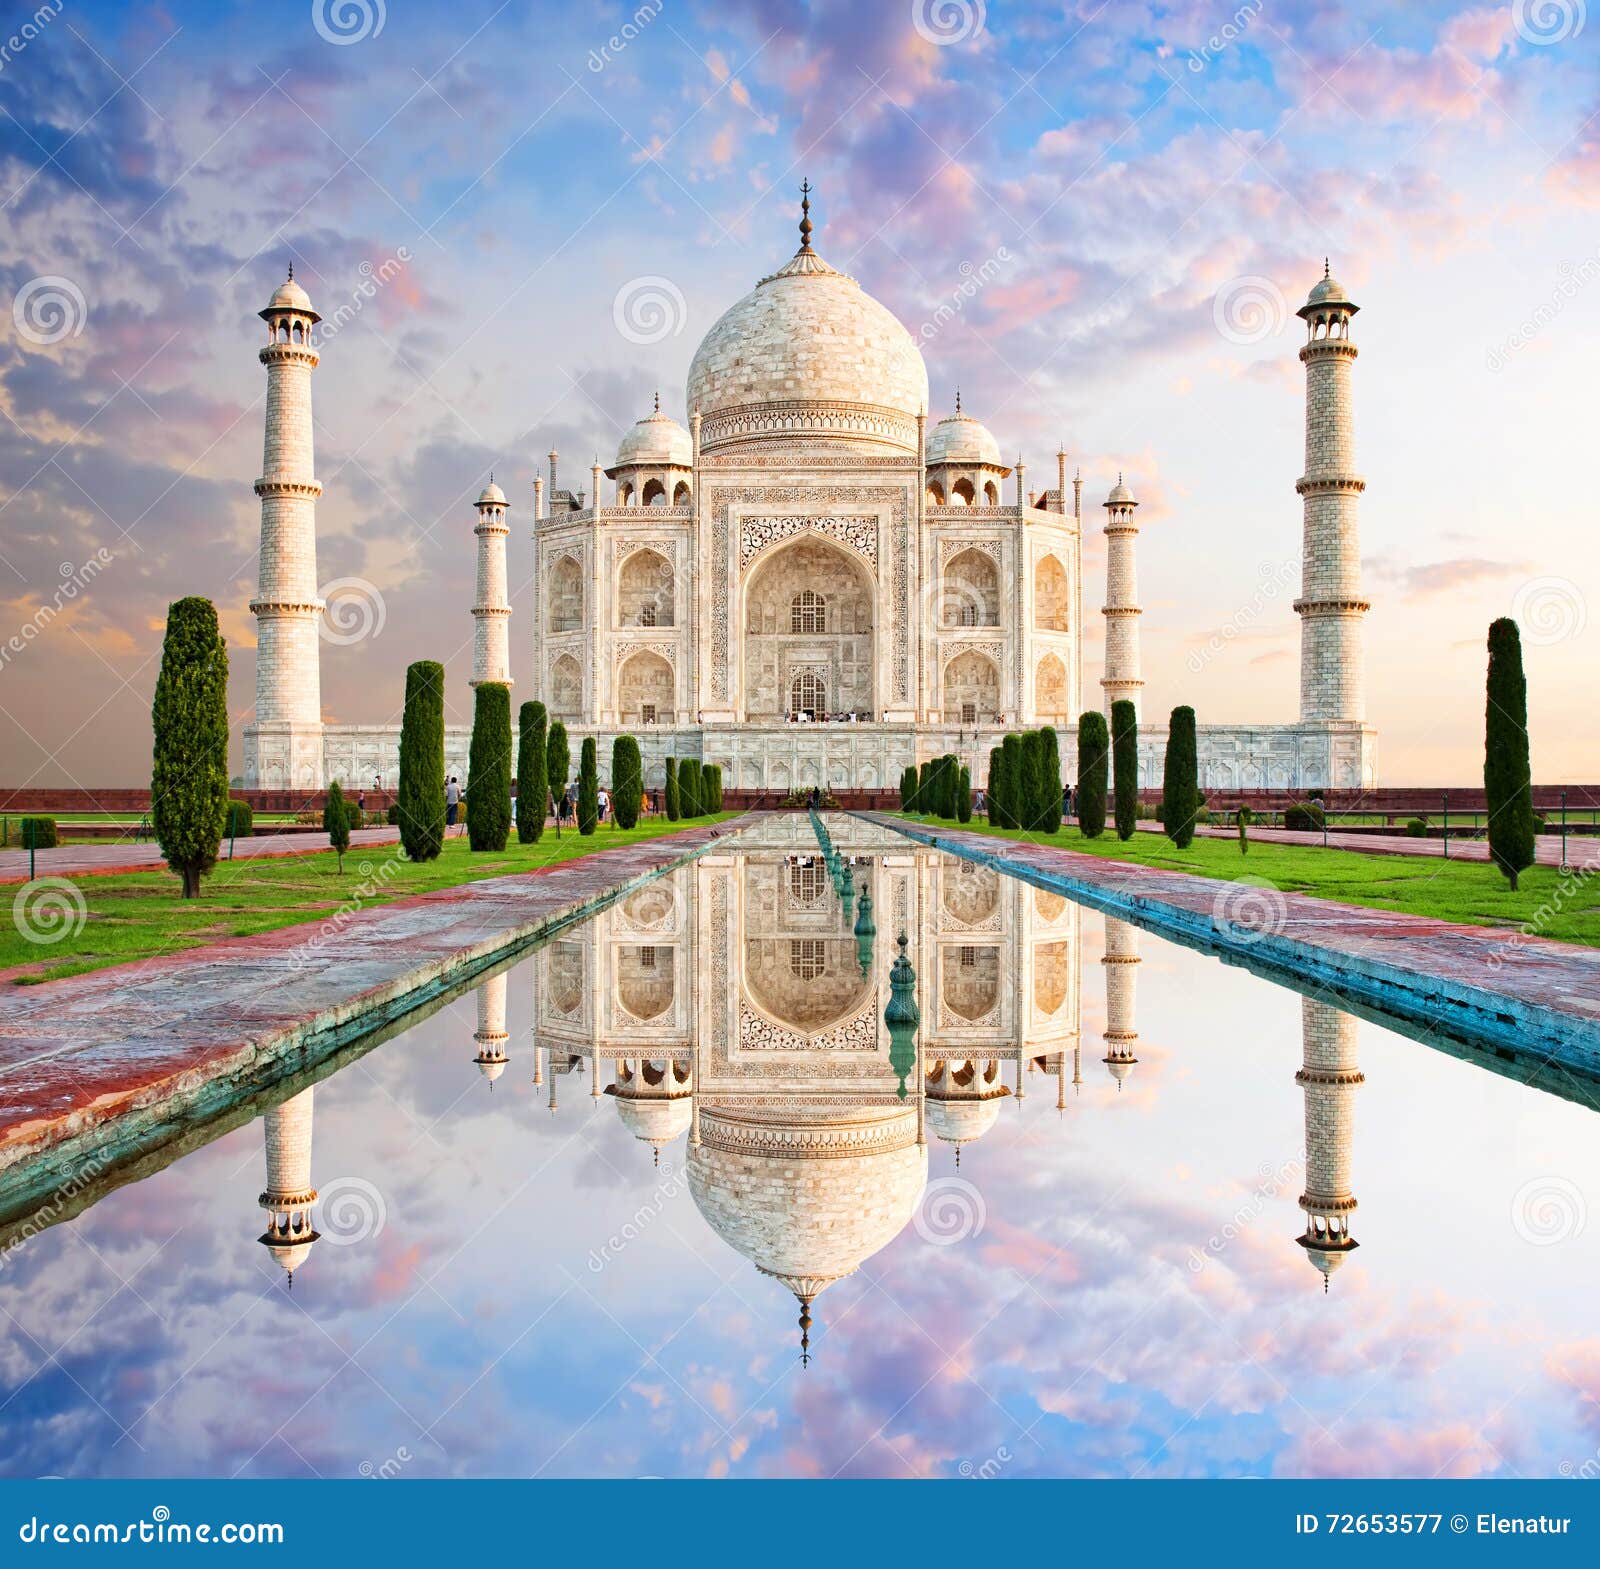 Taj Mahal Royalty-Free Stock Photography | CartoonDealer.com #2747111